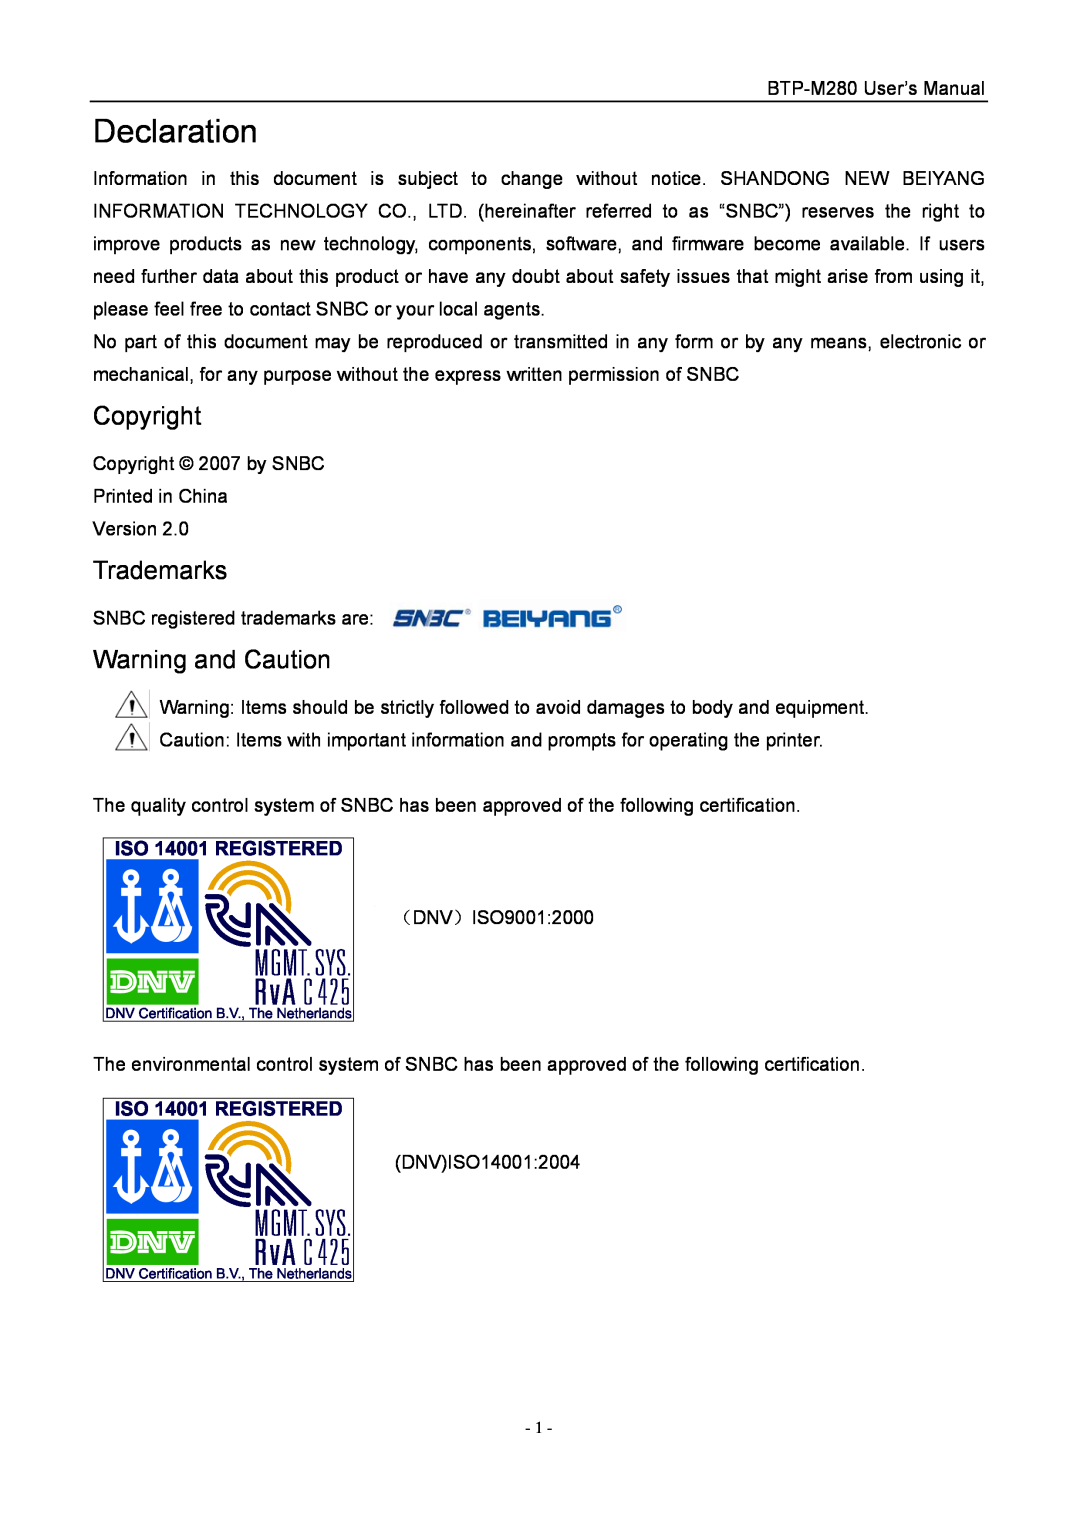 Jiaye General Merchandise Co BTP-M280 user manual Declaration, Copyright, Trademarks, Warning and Caution 